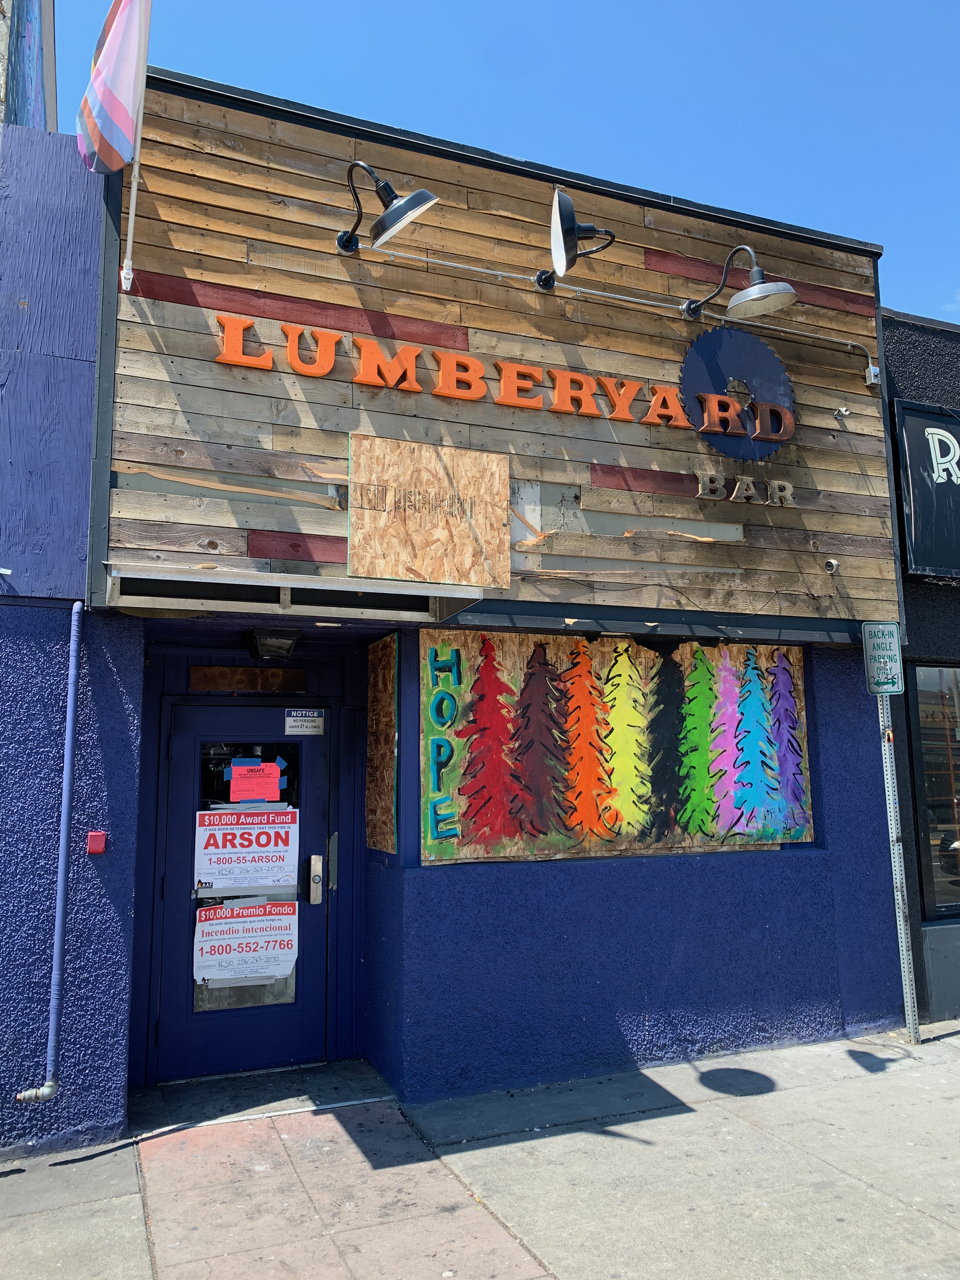 The front of the lumberyard bar